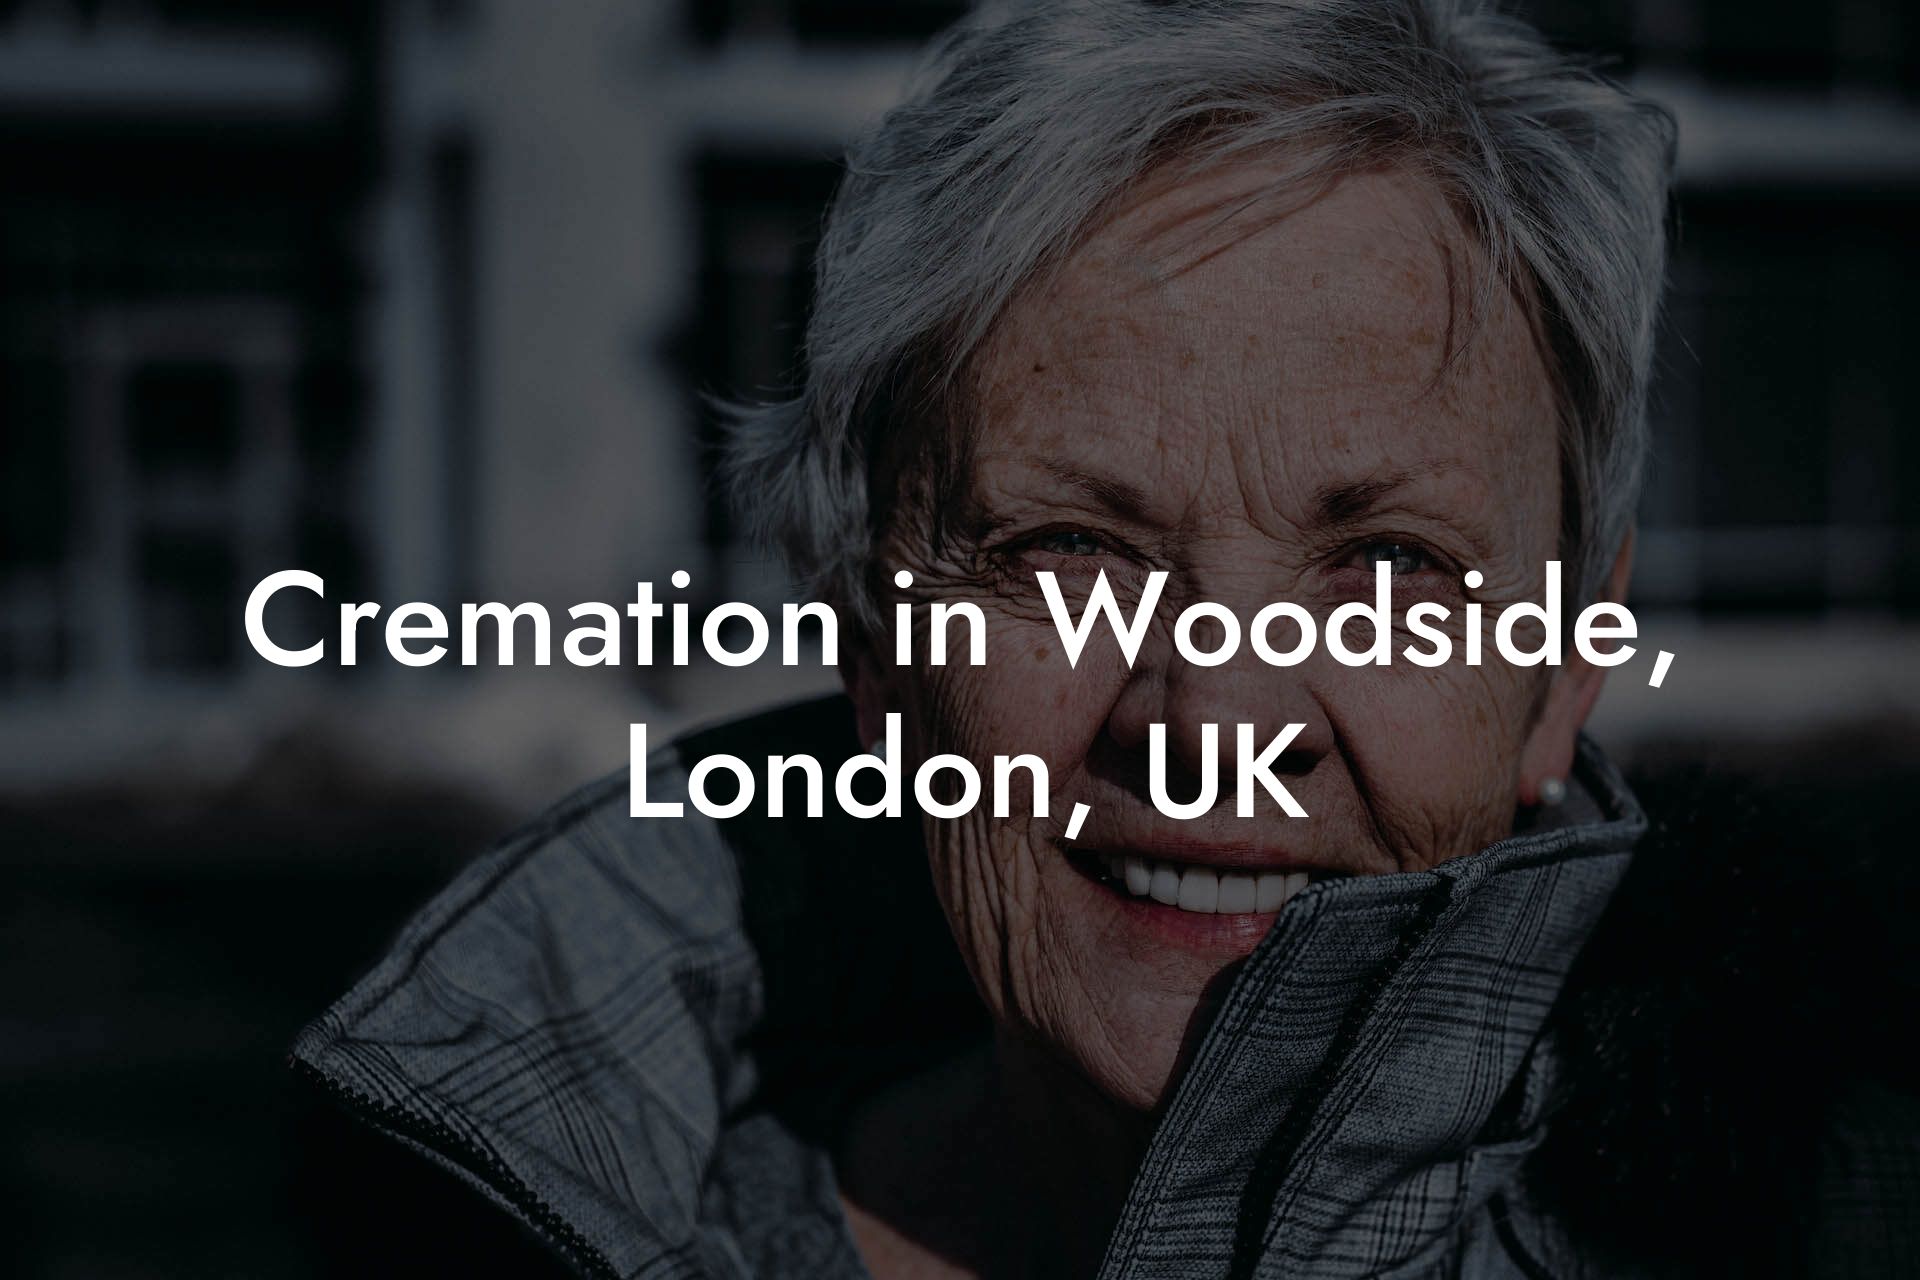 Cremation in Woodside, London, UK